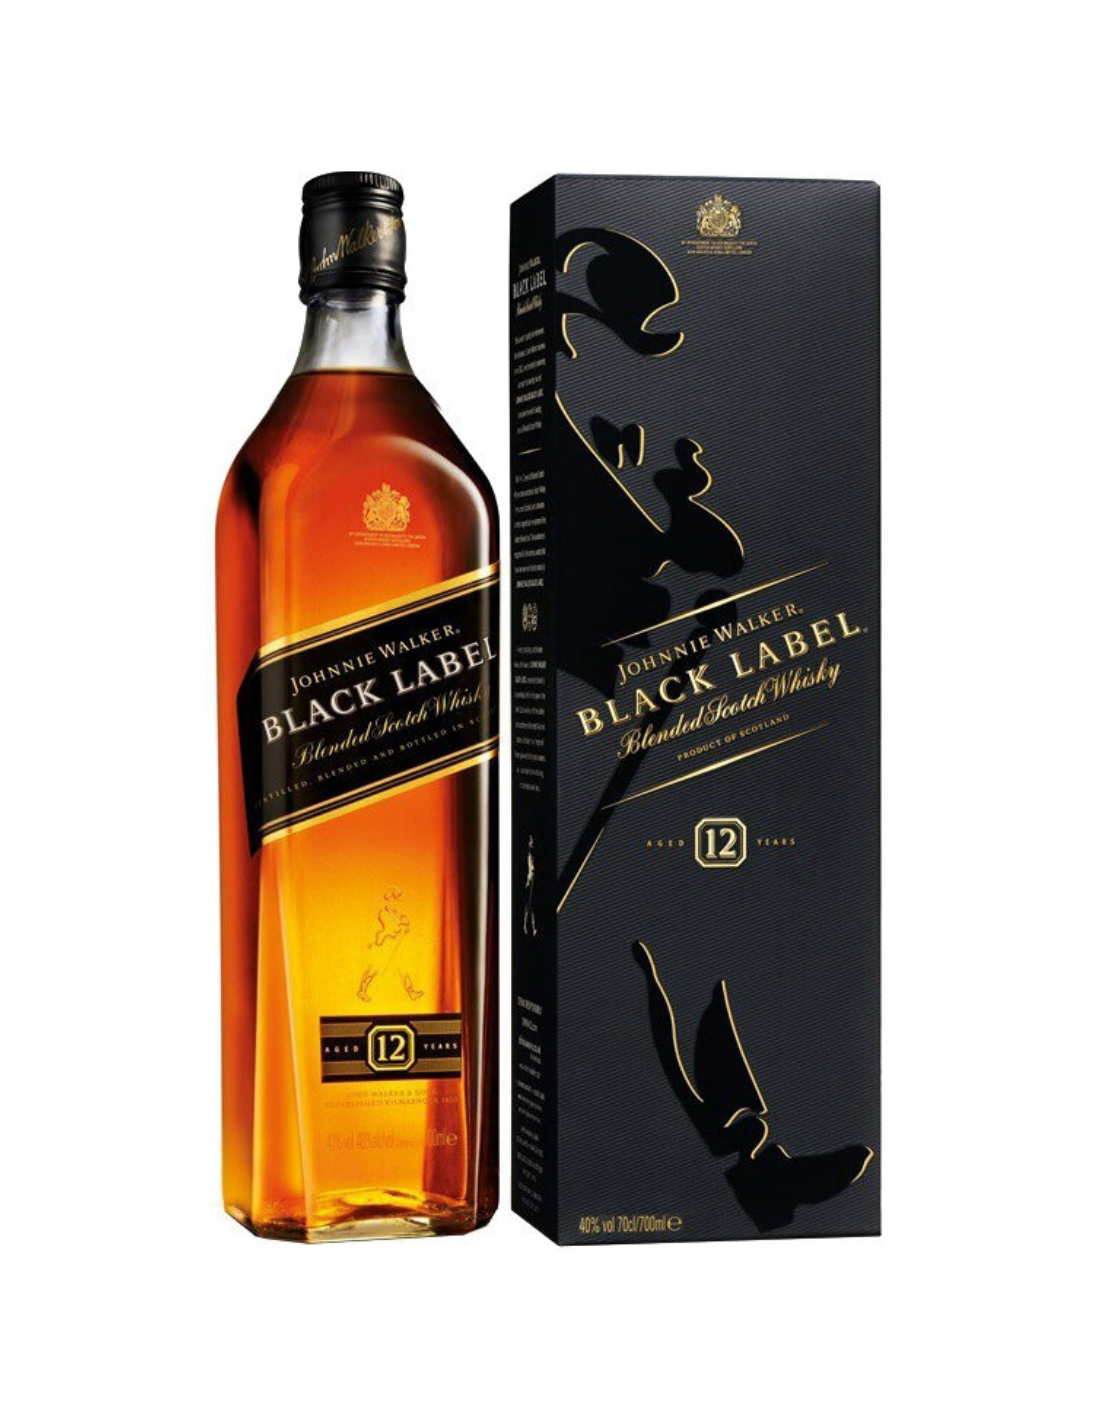 Whisky Johnnie Walker Black Label, 0.7L, 12 ani, 40% alc., Scotia alcooldiscount.ro